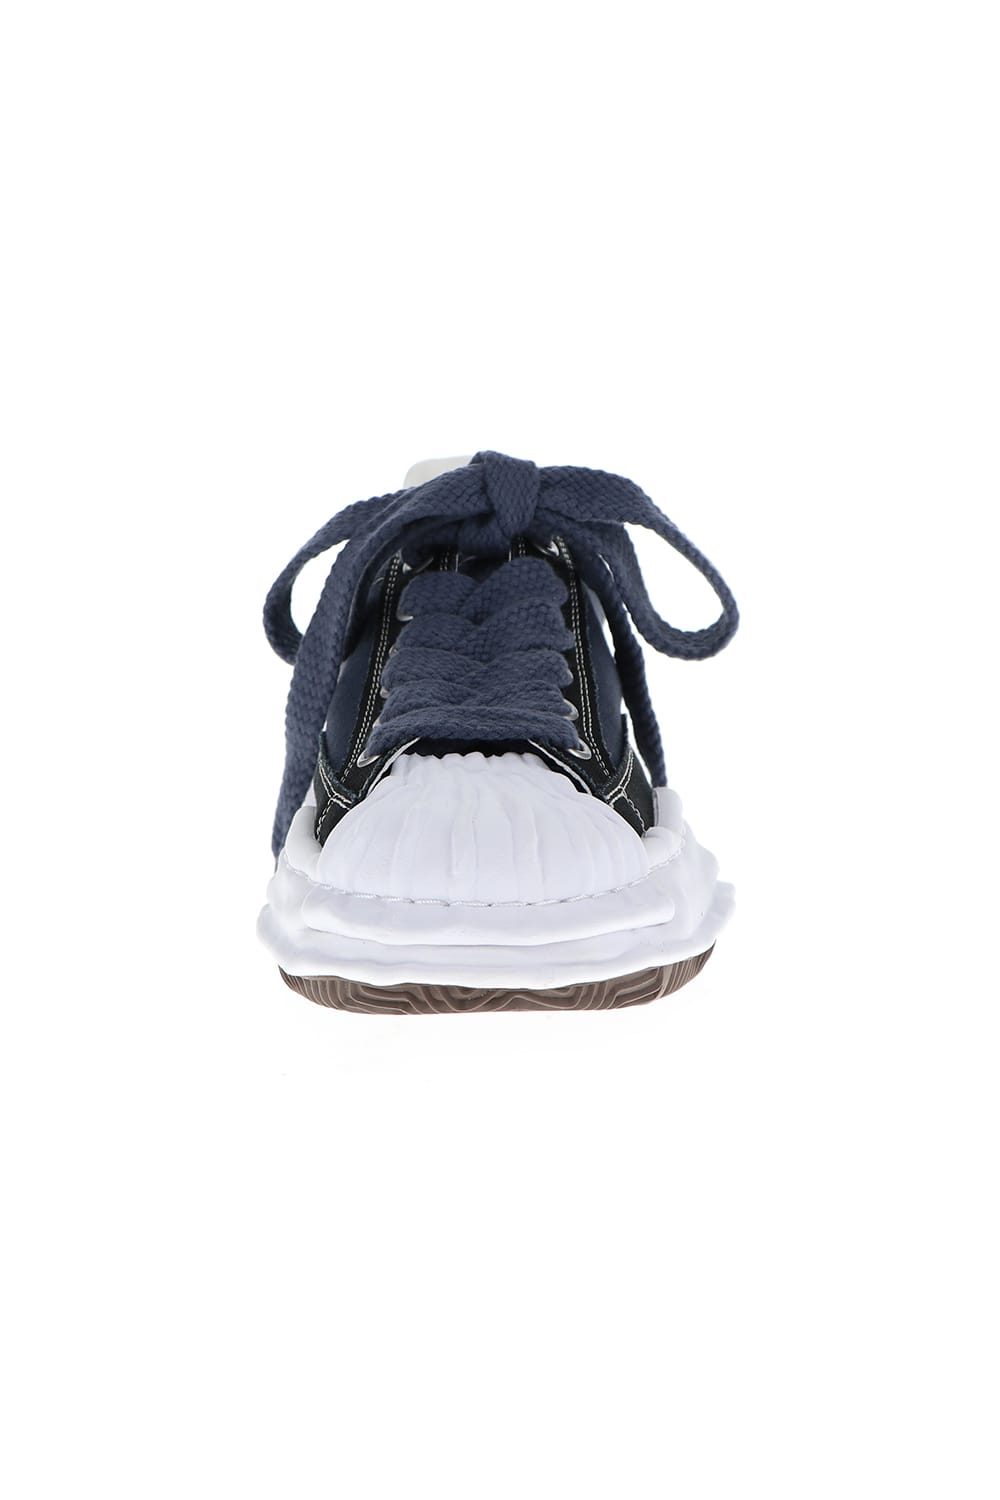 -BLAKEY Low- Original sole canvas Low-Top sneakers Black